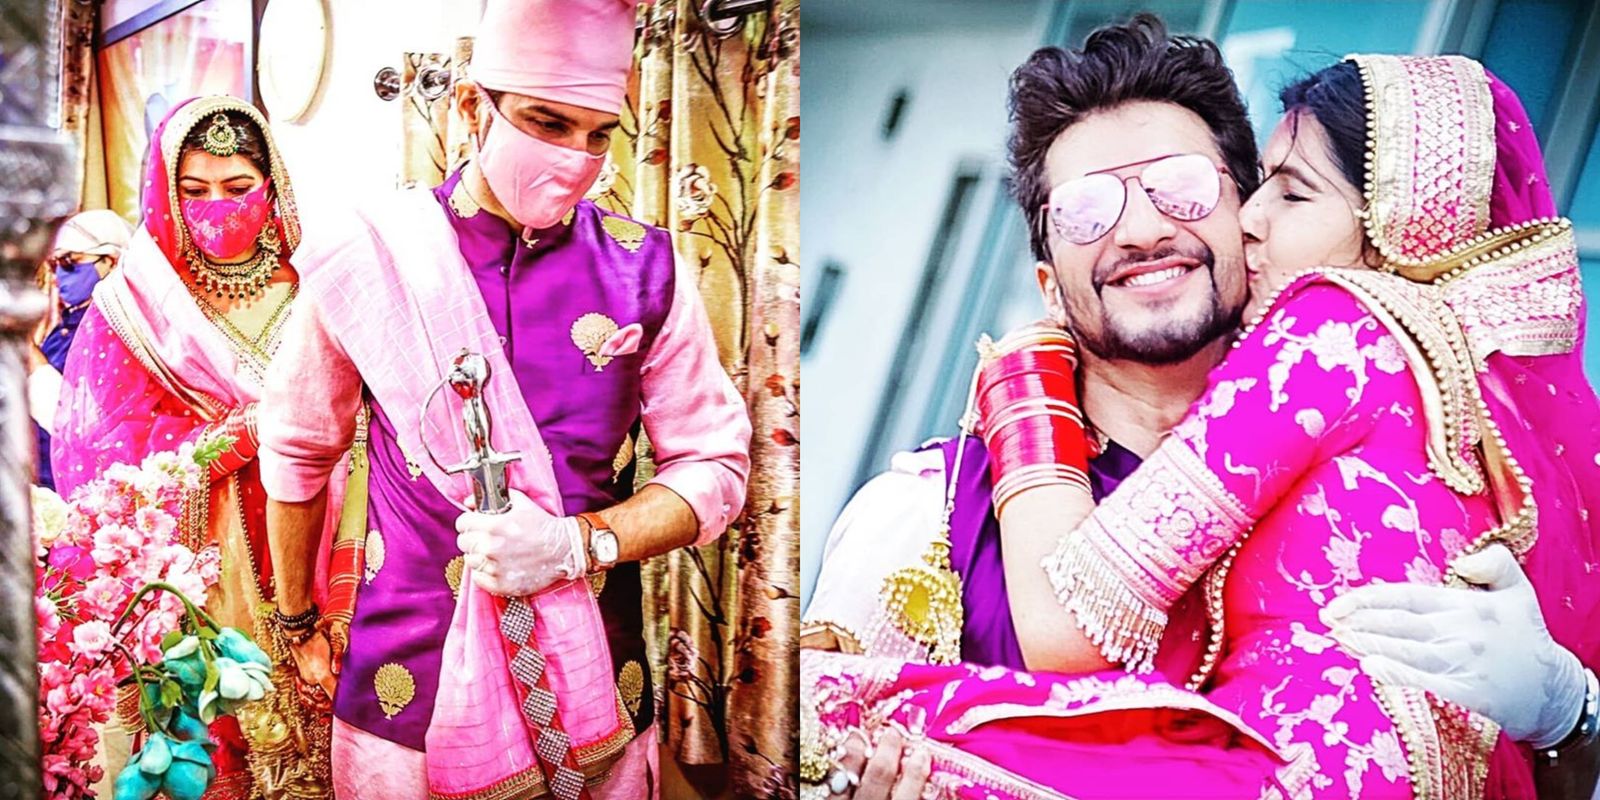 TV Actor Manish Raisinghan Shares Photos With Wife Sangeita Chauhaan From Their Gurudwara Wedding Writes, 'Just Married'